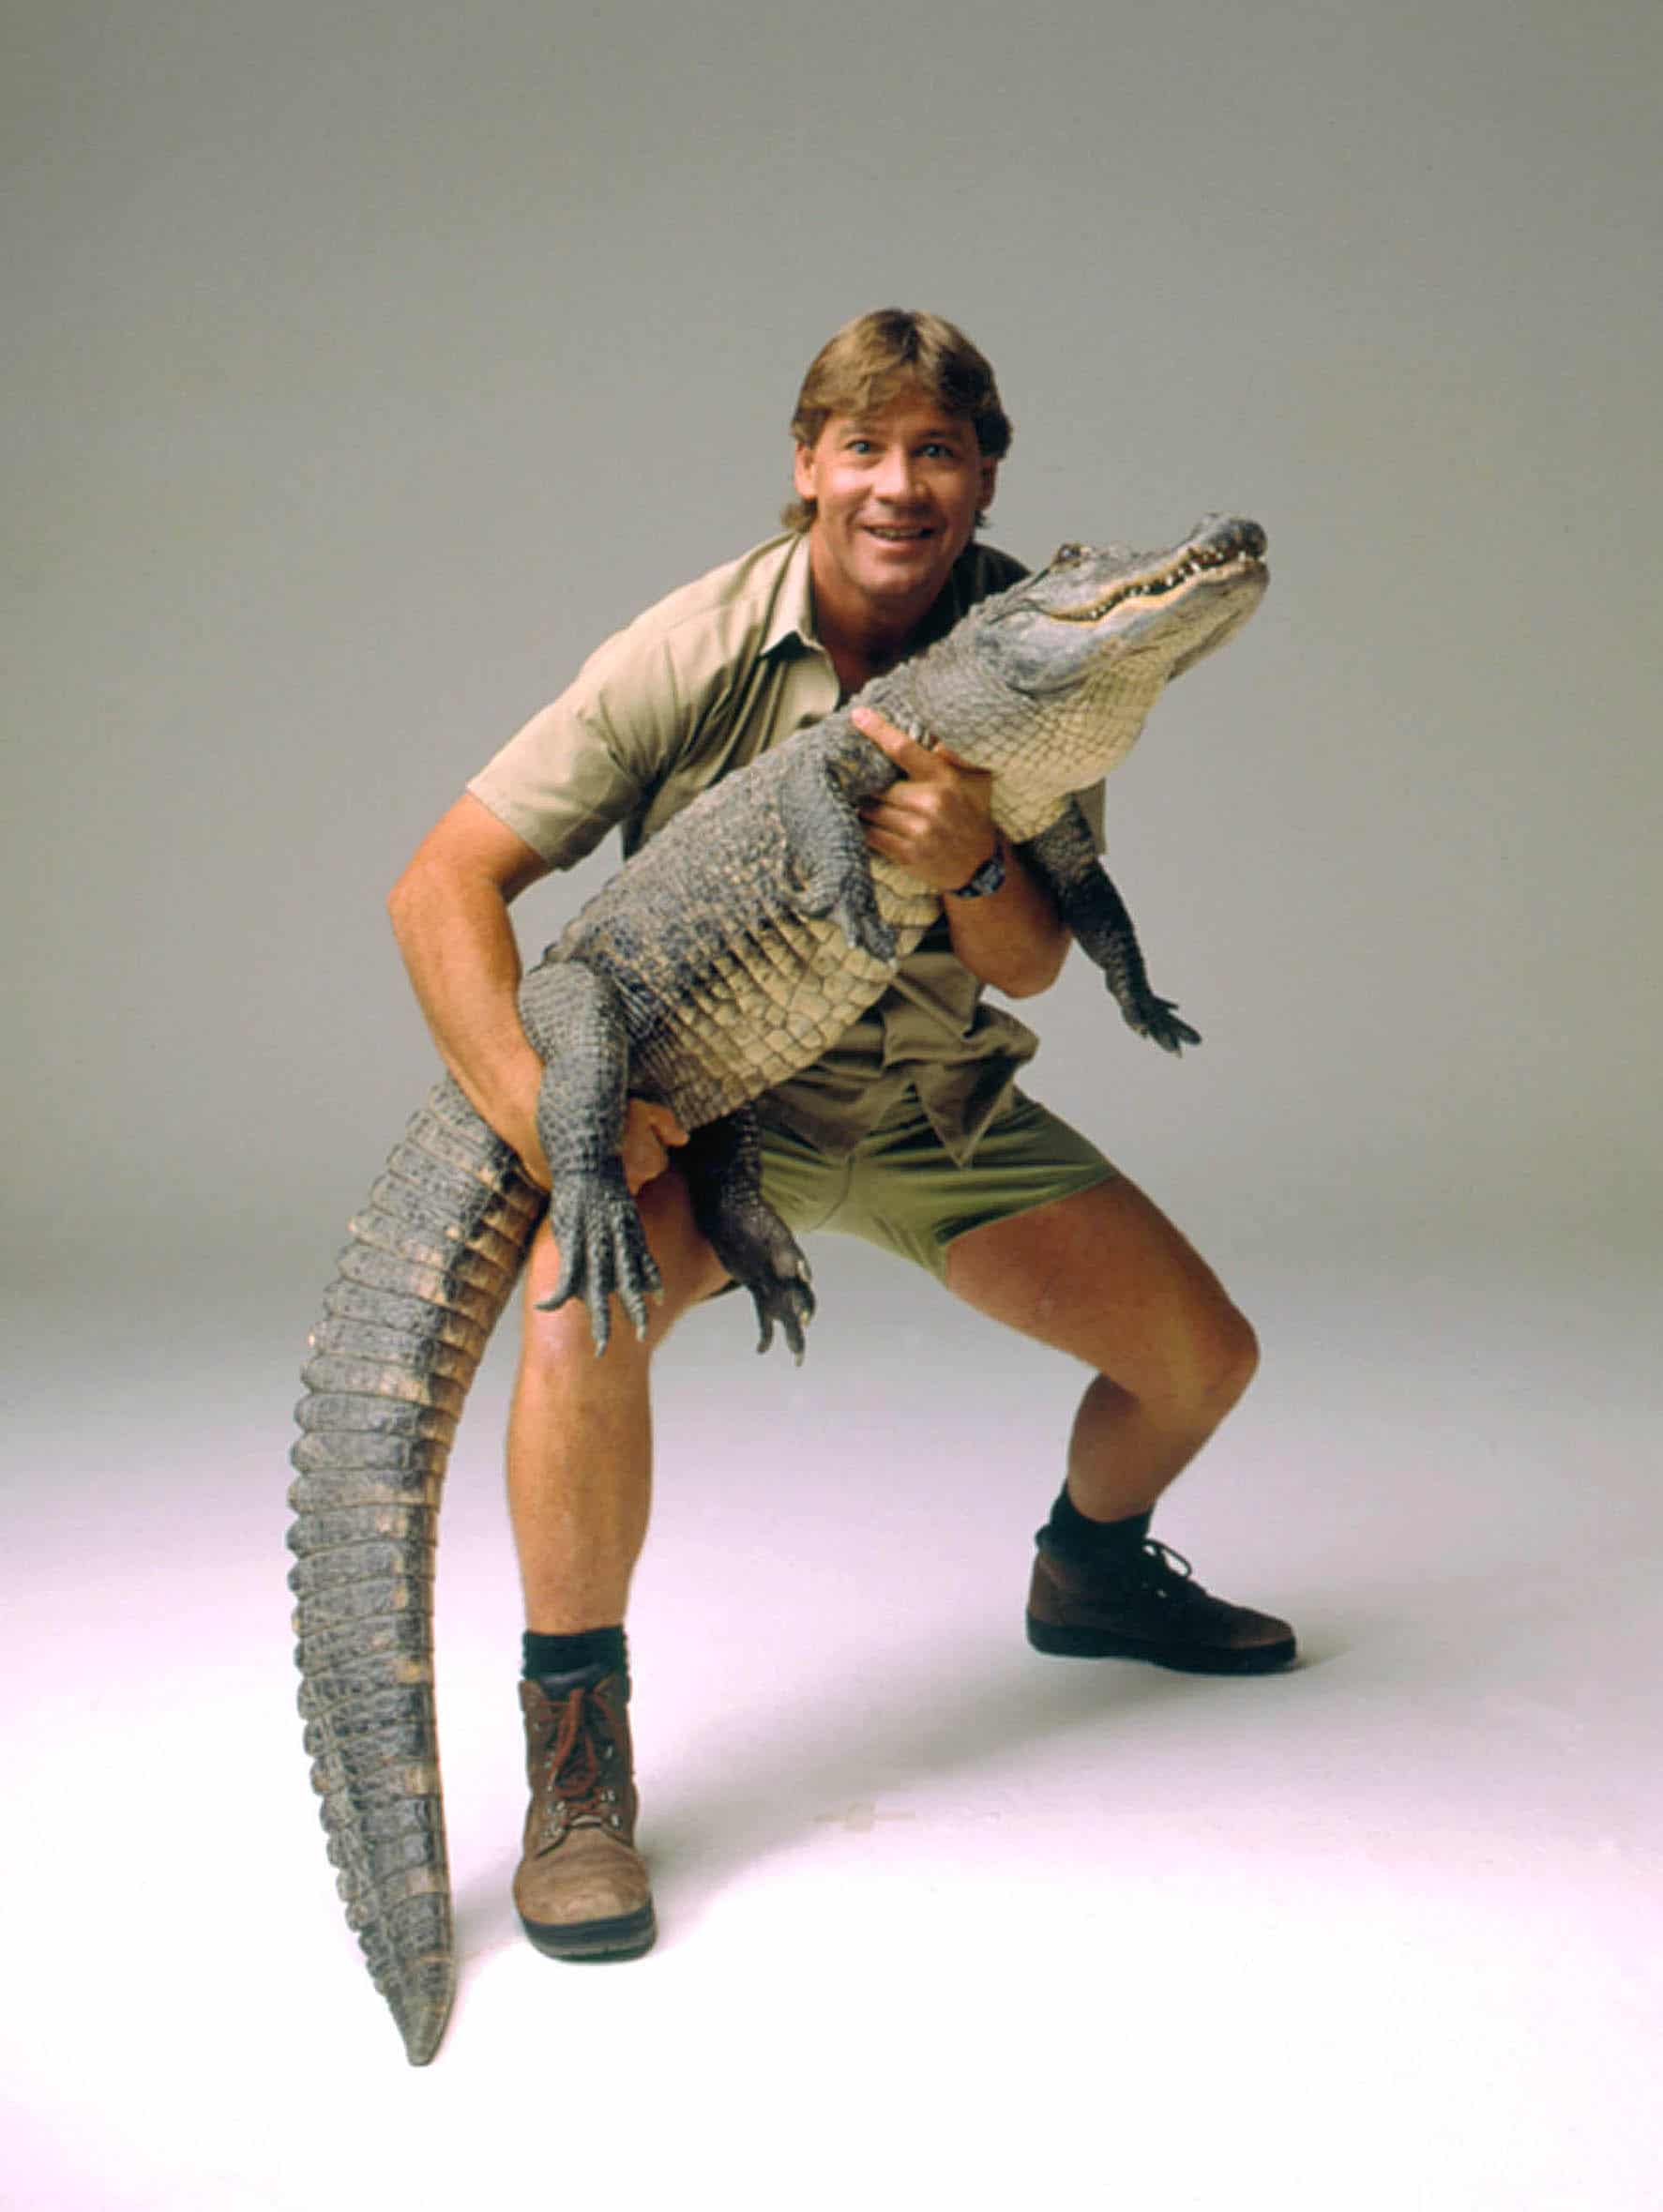 CROCODILE HUNTER, Steve Irwin, aired 11/27/00, 1996-2006